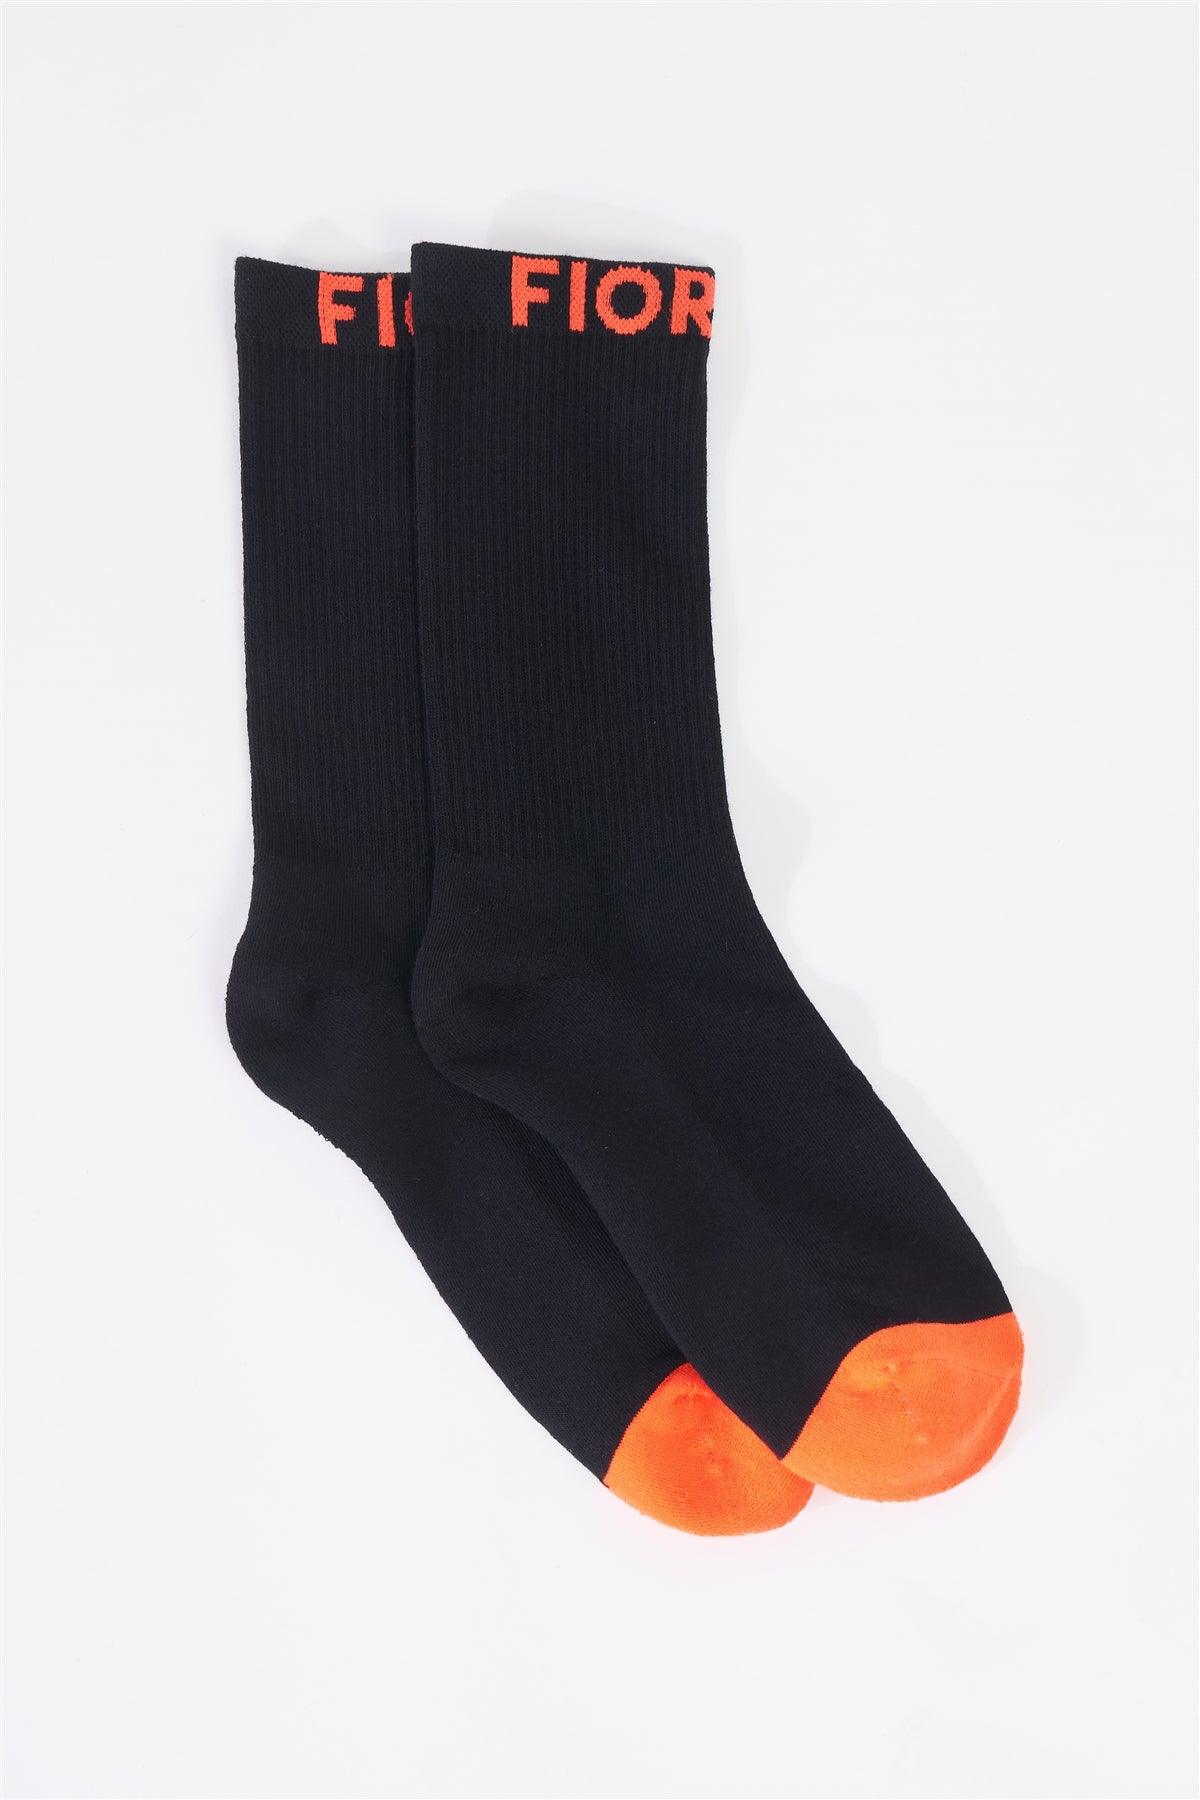 Fiorucci Fun Black & Orange Mid Calf Ribbed Printed Logo Detail Socks /3 Pairs